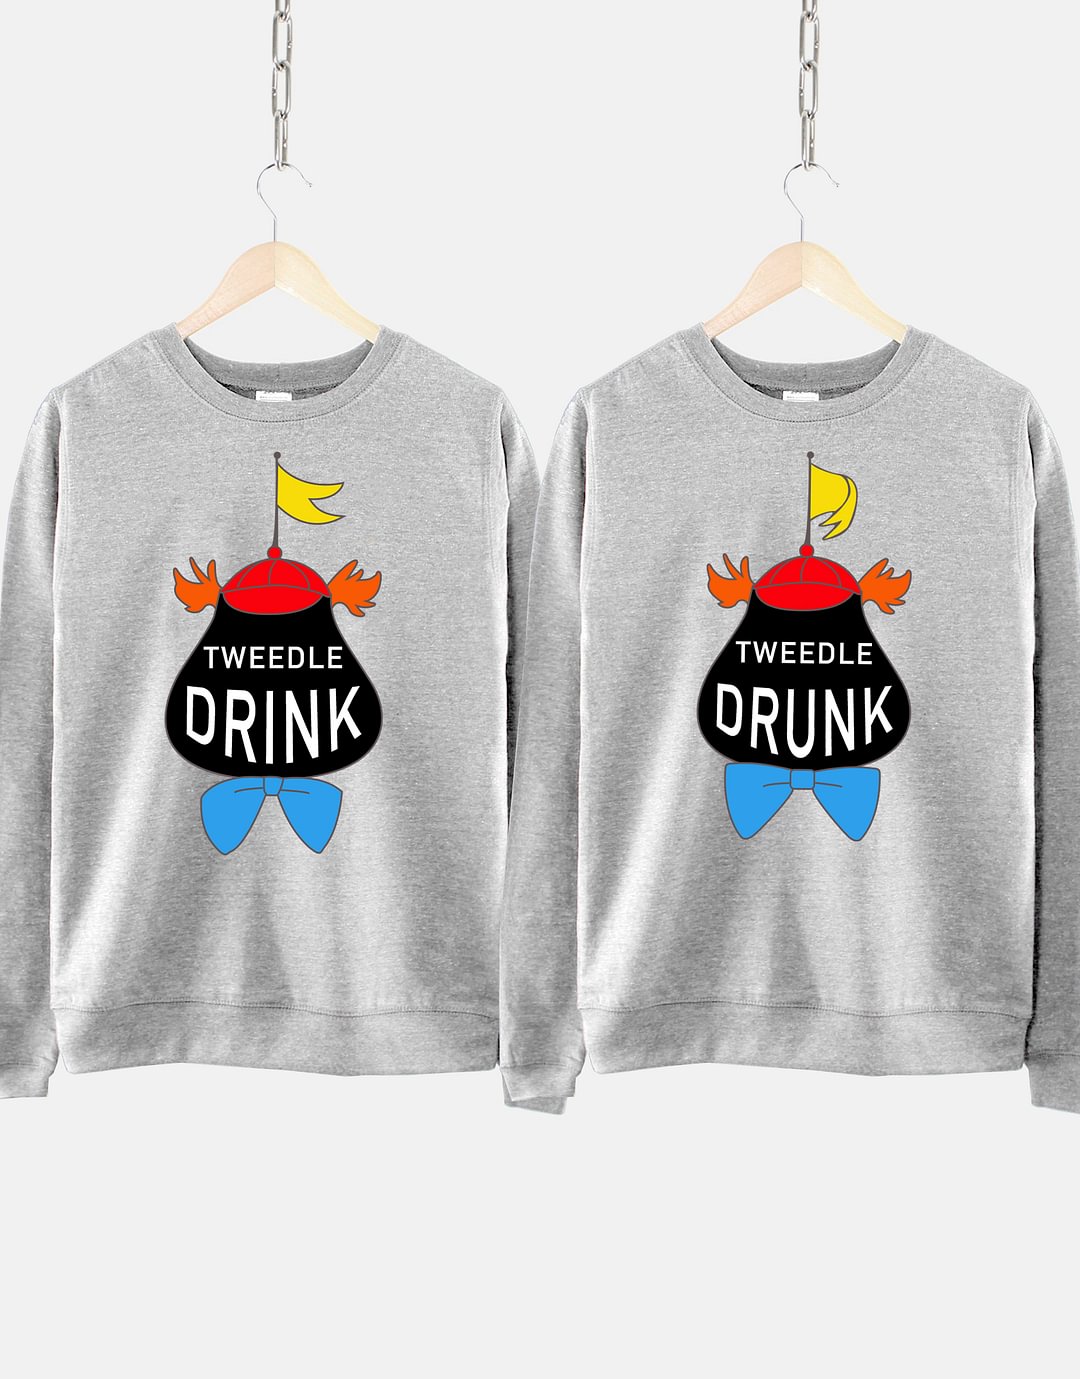 Tweedle Drink/Tweedle Drunk Sweatshirt